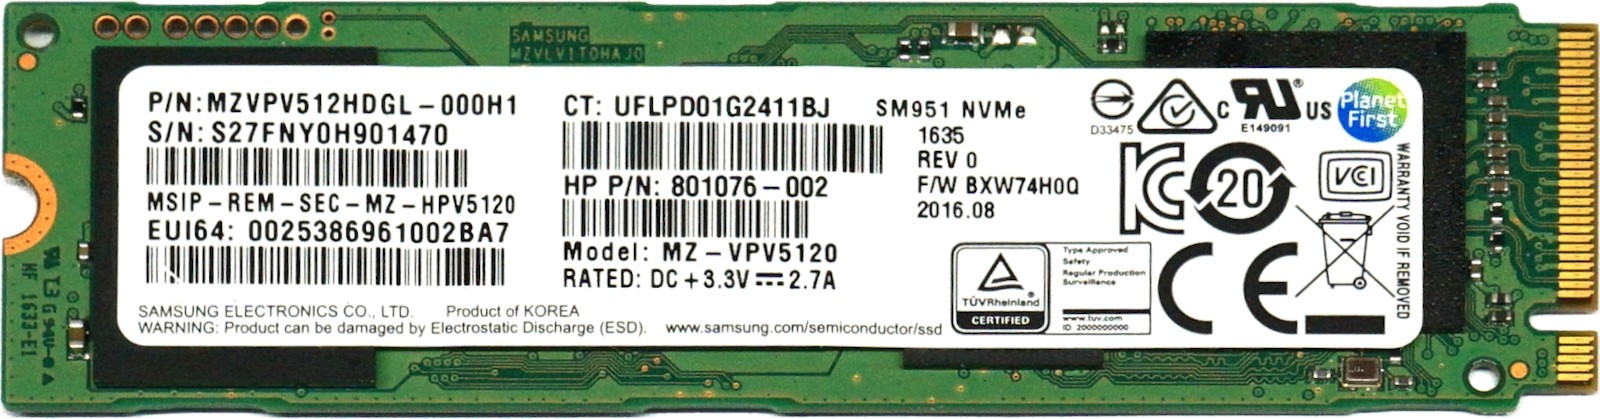 HP (801076-002) 512GB Samsung SM951 NVMe (M.2 2280) SSD